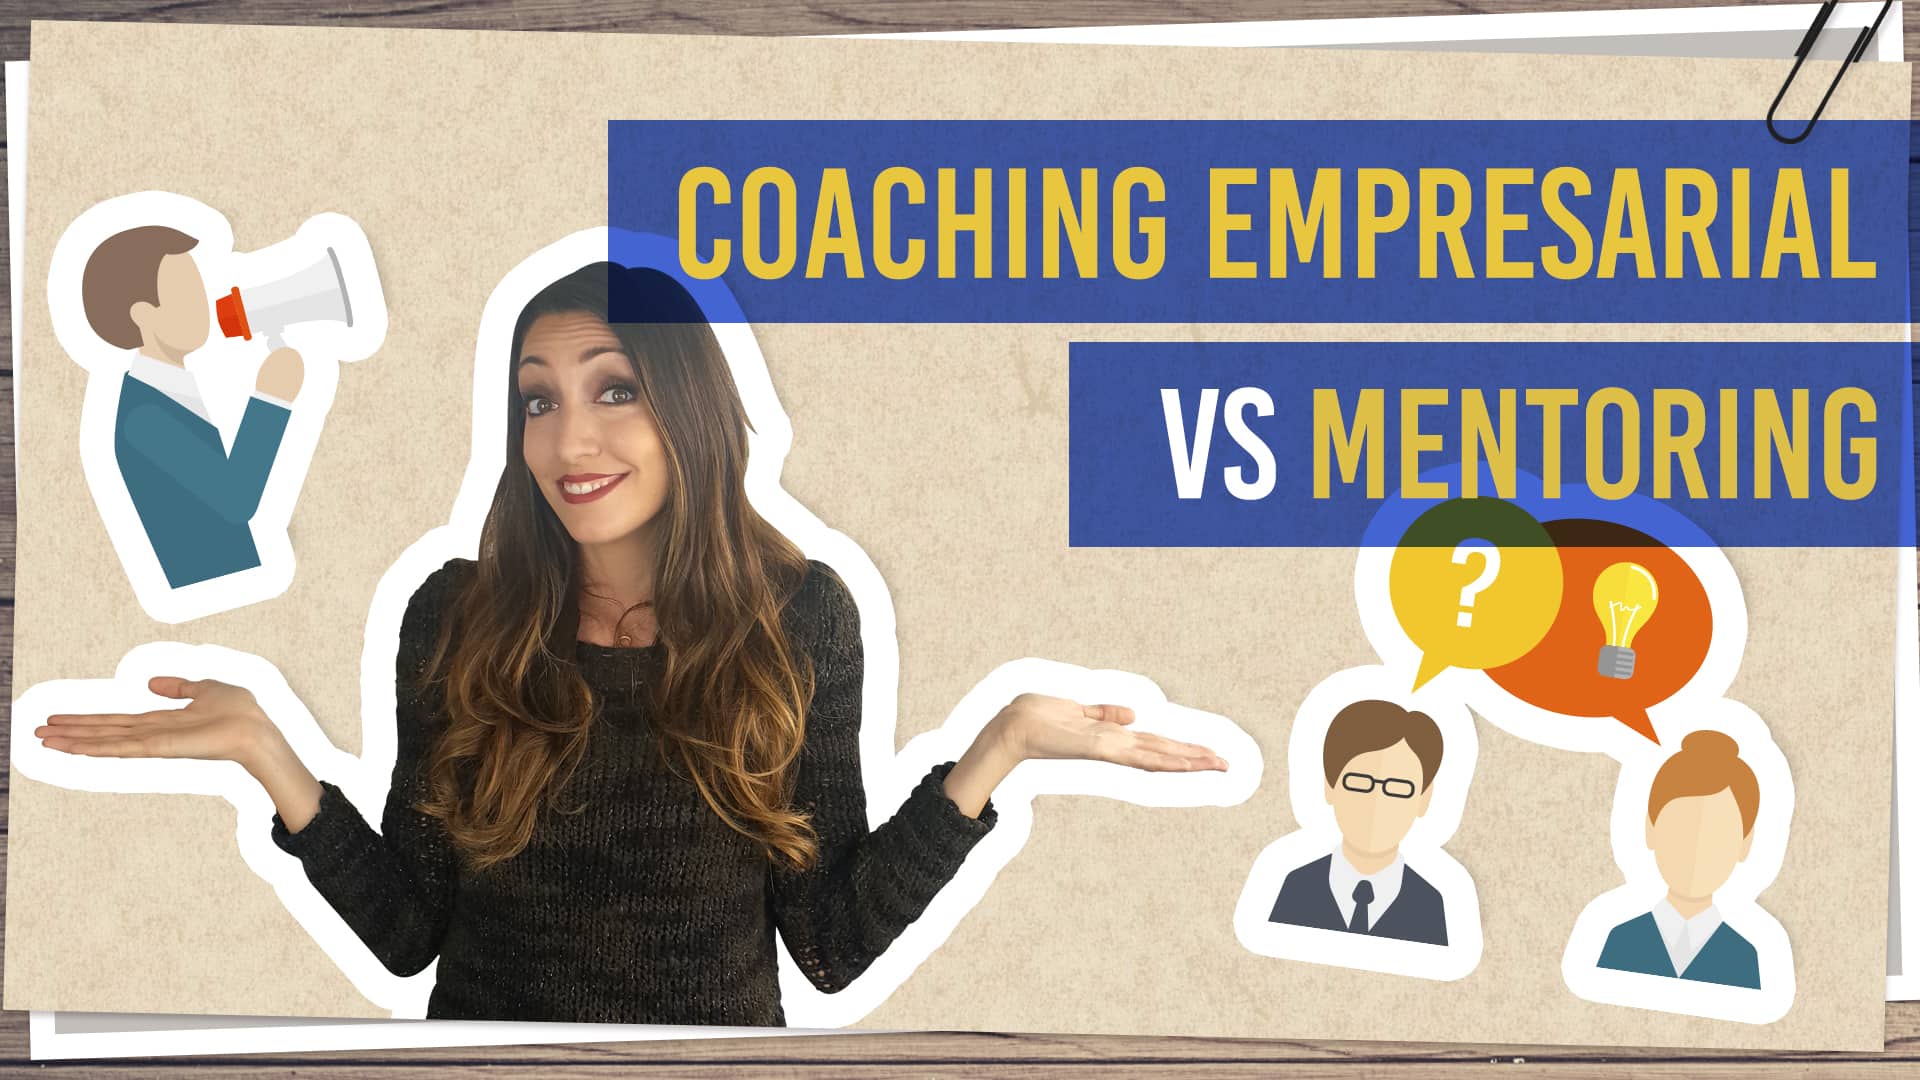 Coaching empresarial vs mentoring